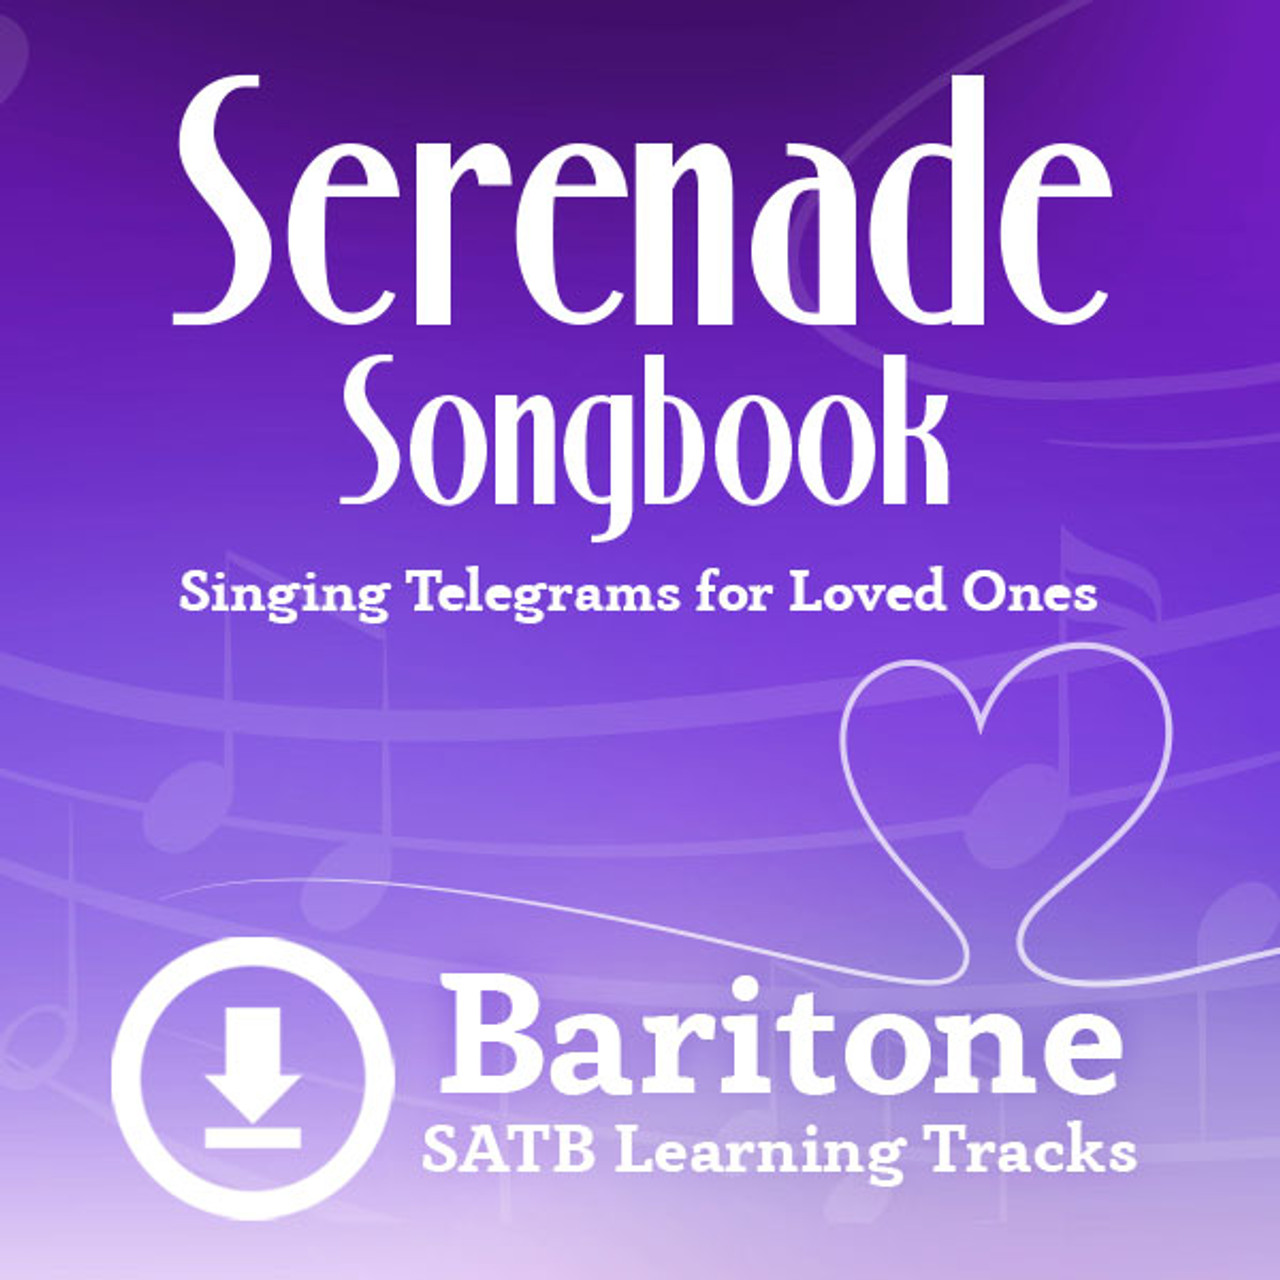 Serenade Songbook (SATB) (Baritone) - Digital Learning Tracks for 214112